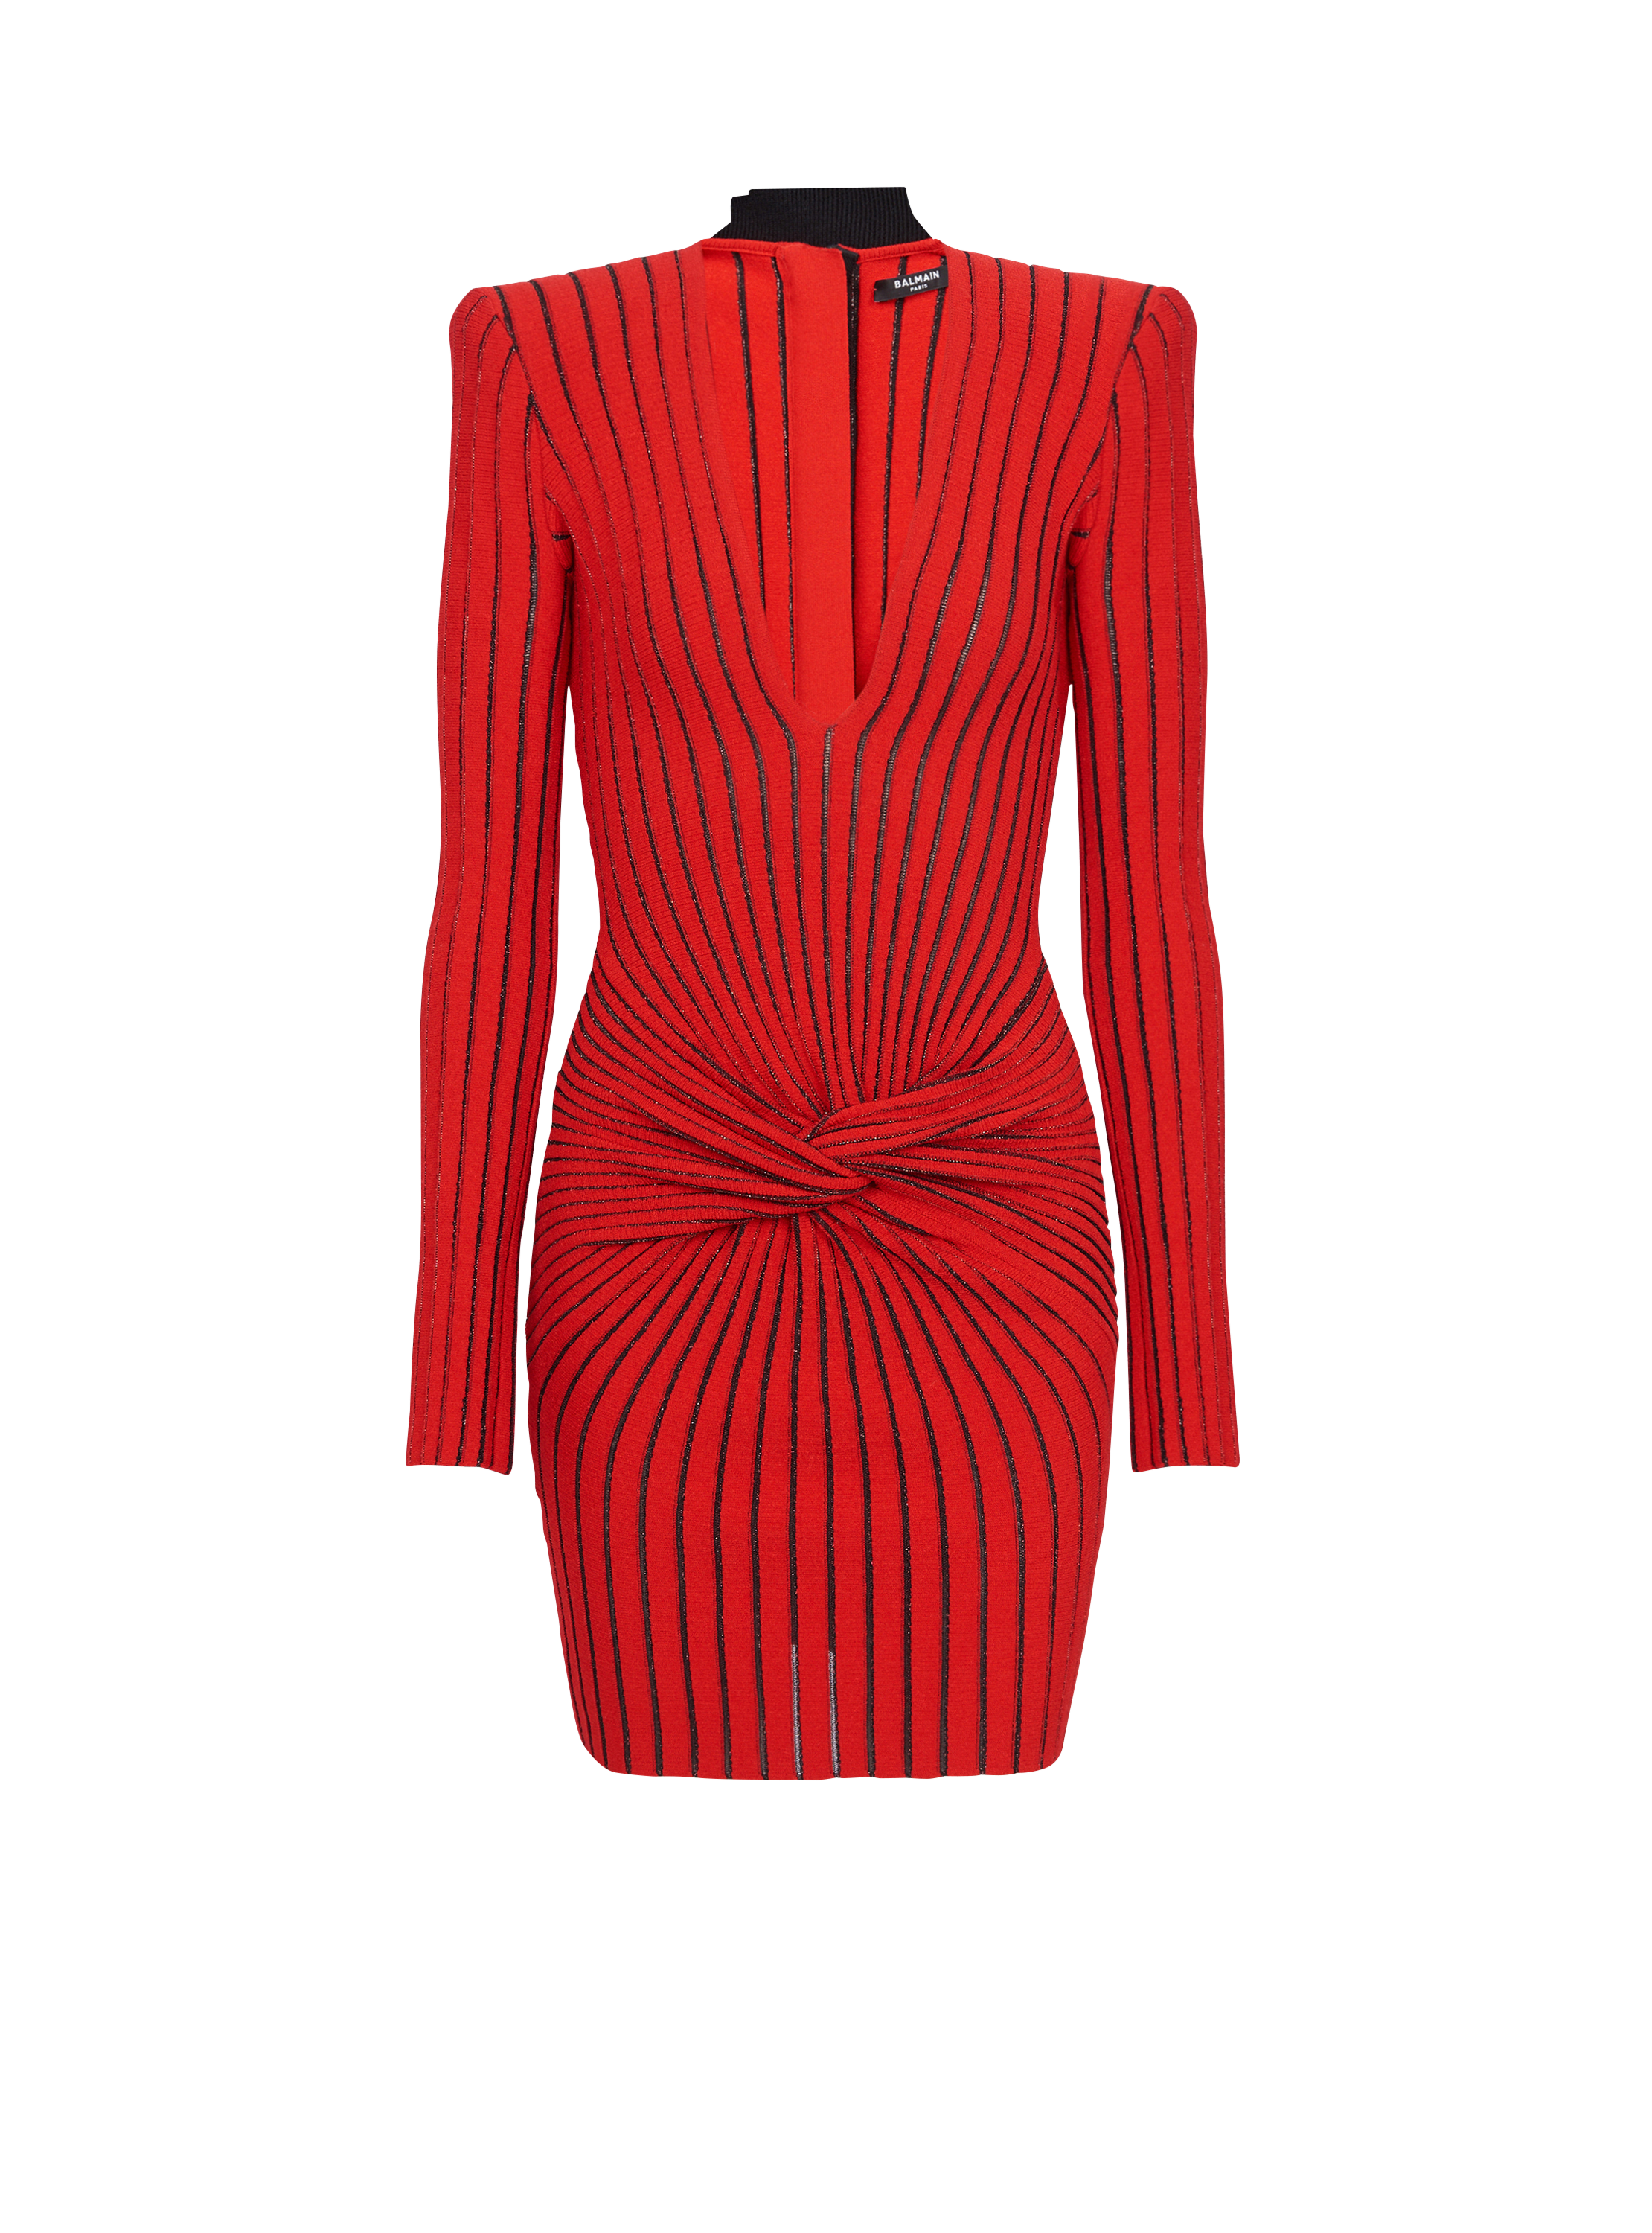 Draped knit dress, red, hi-res